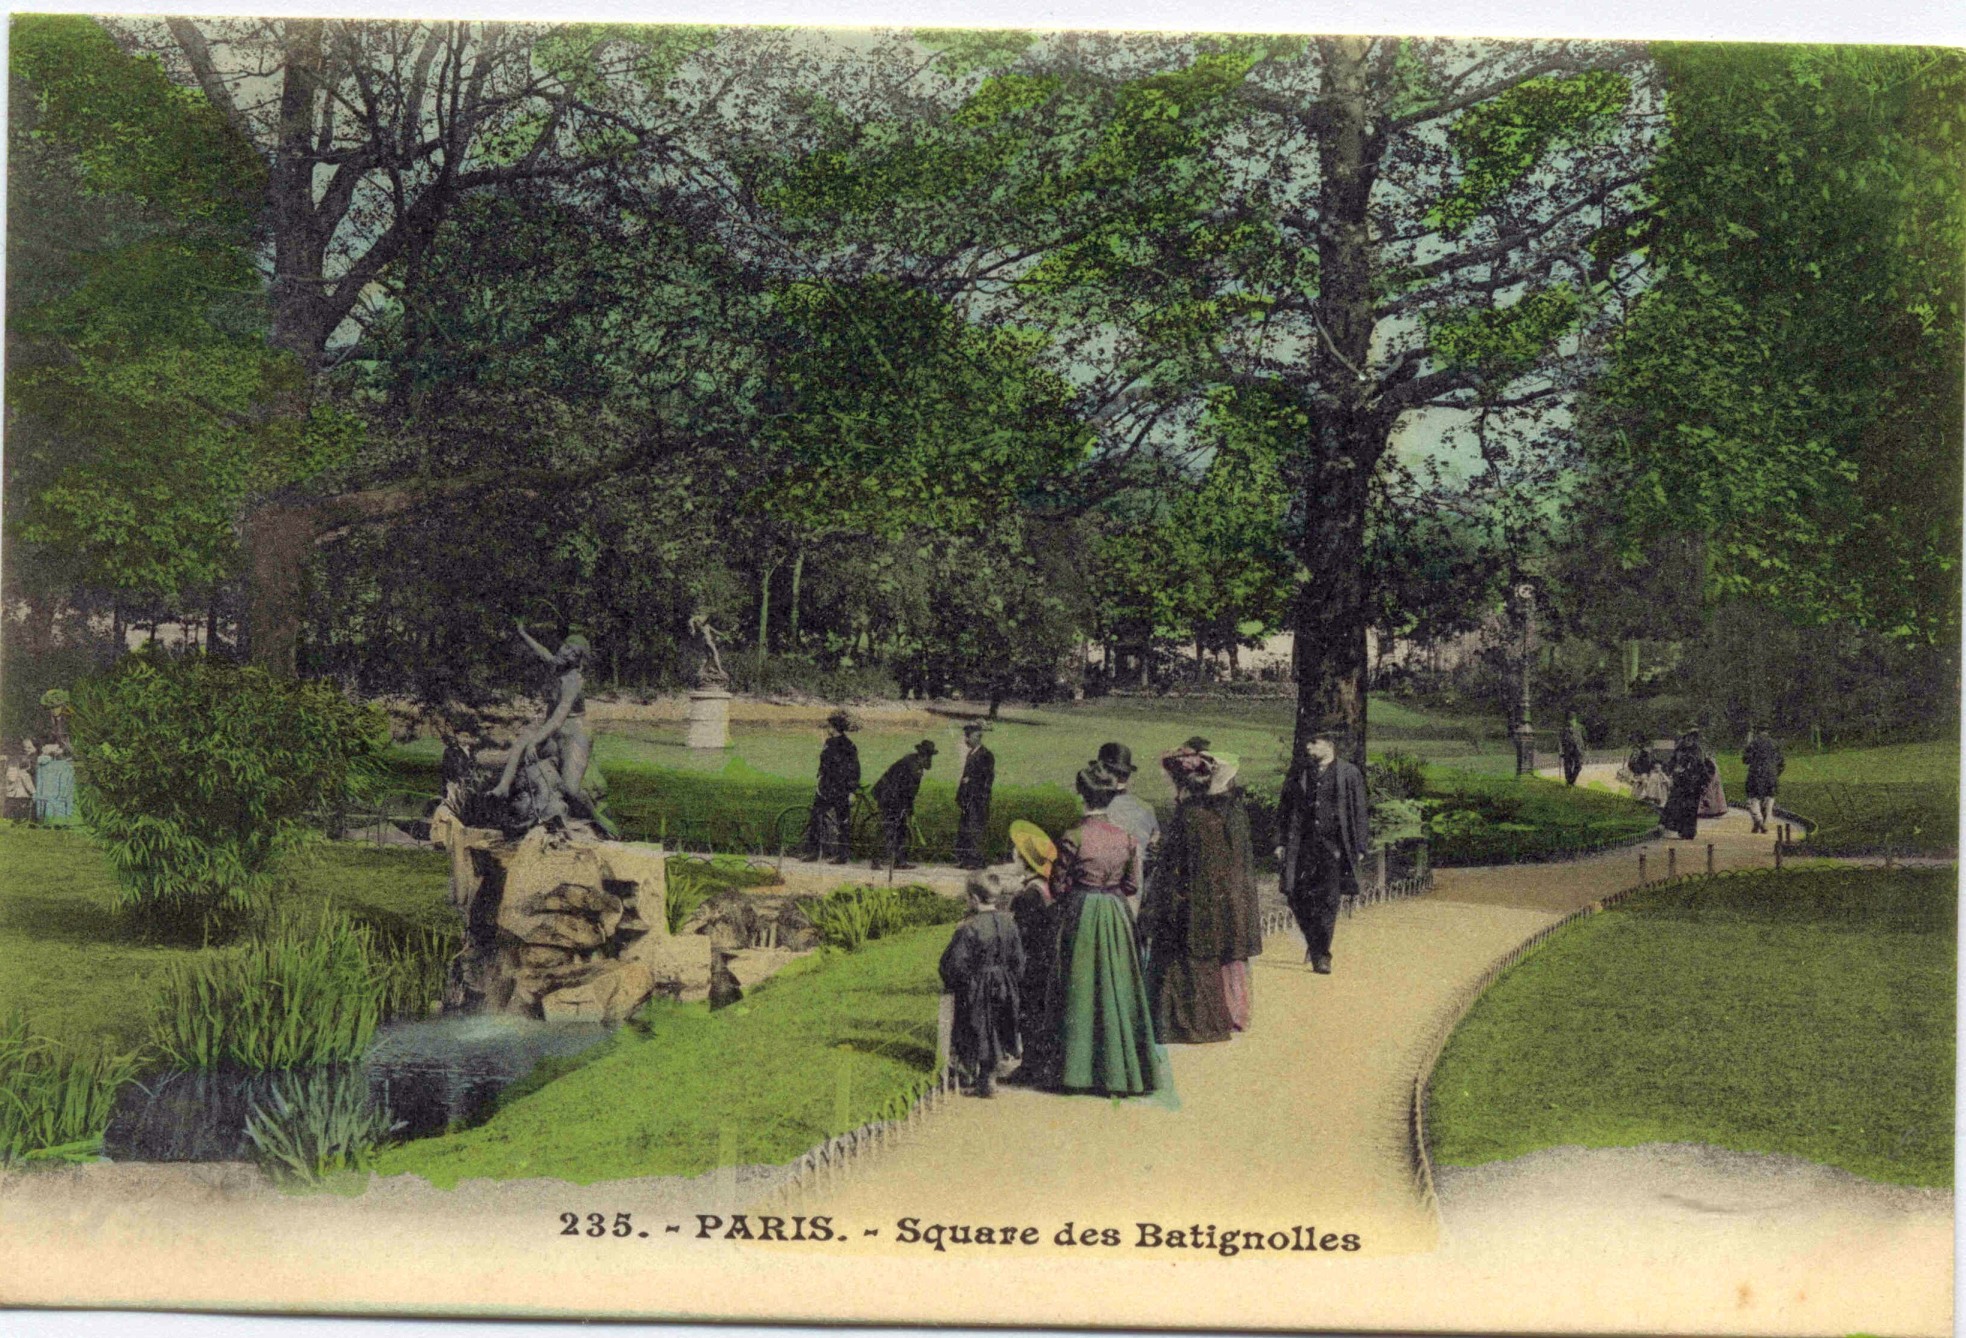 Paris Square des Batignolles